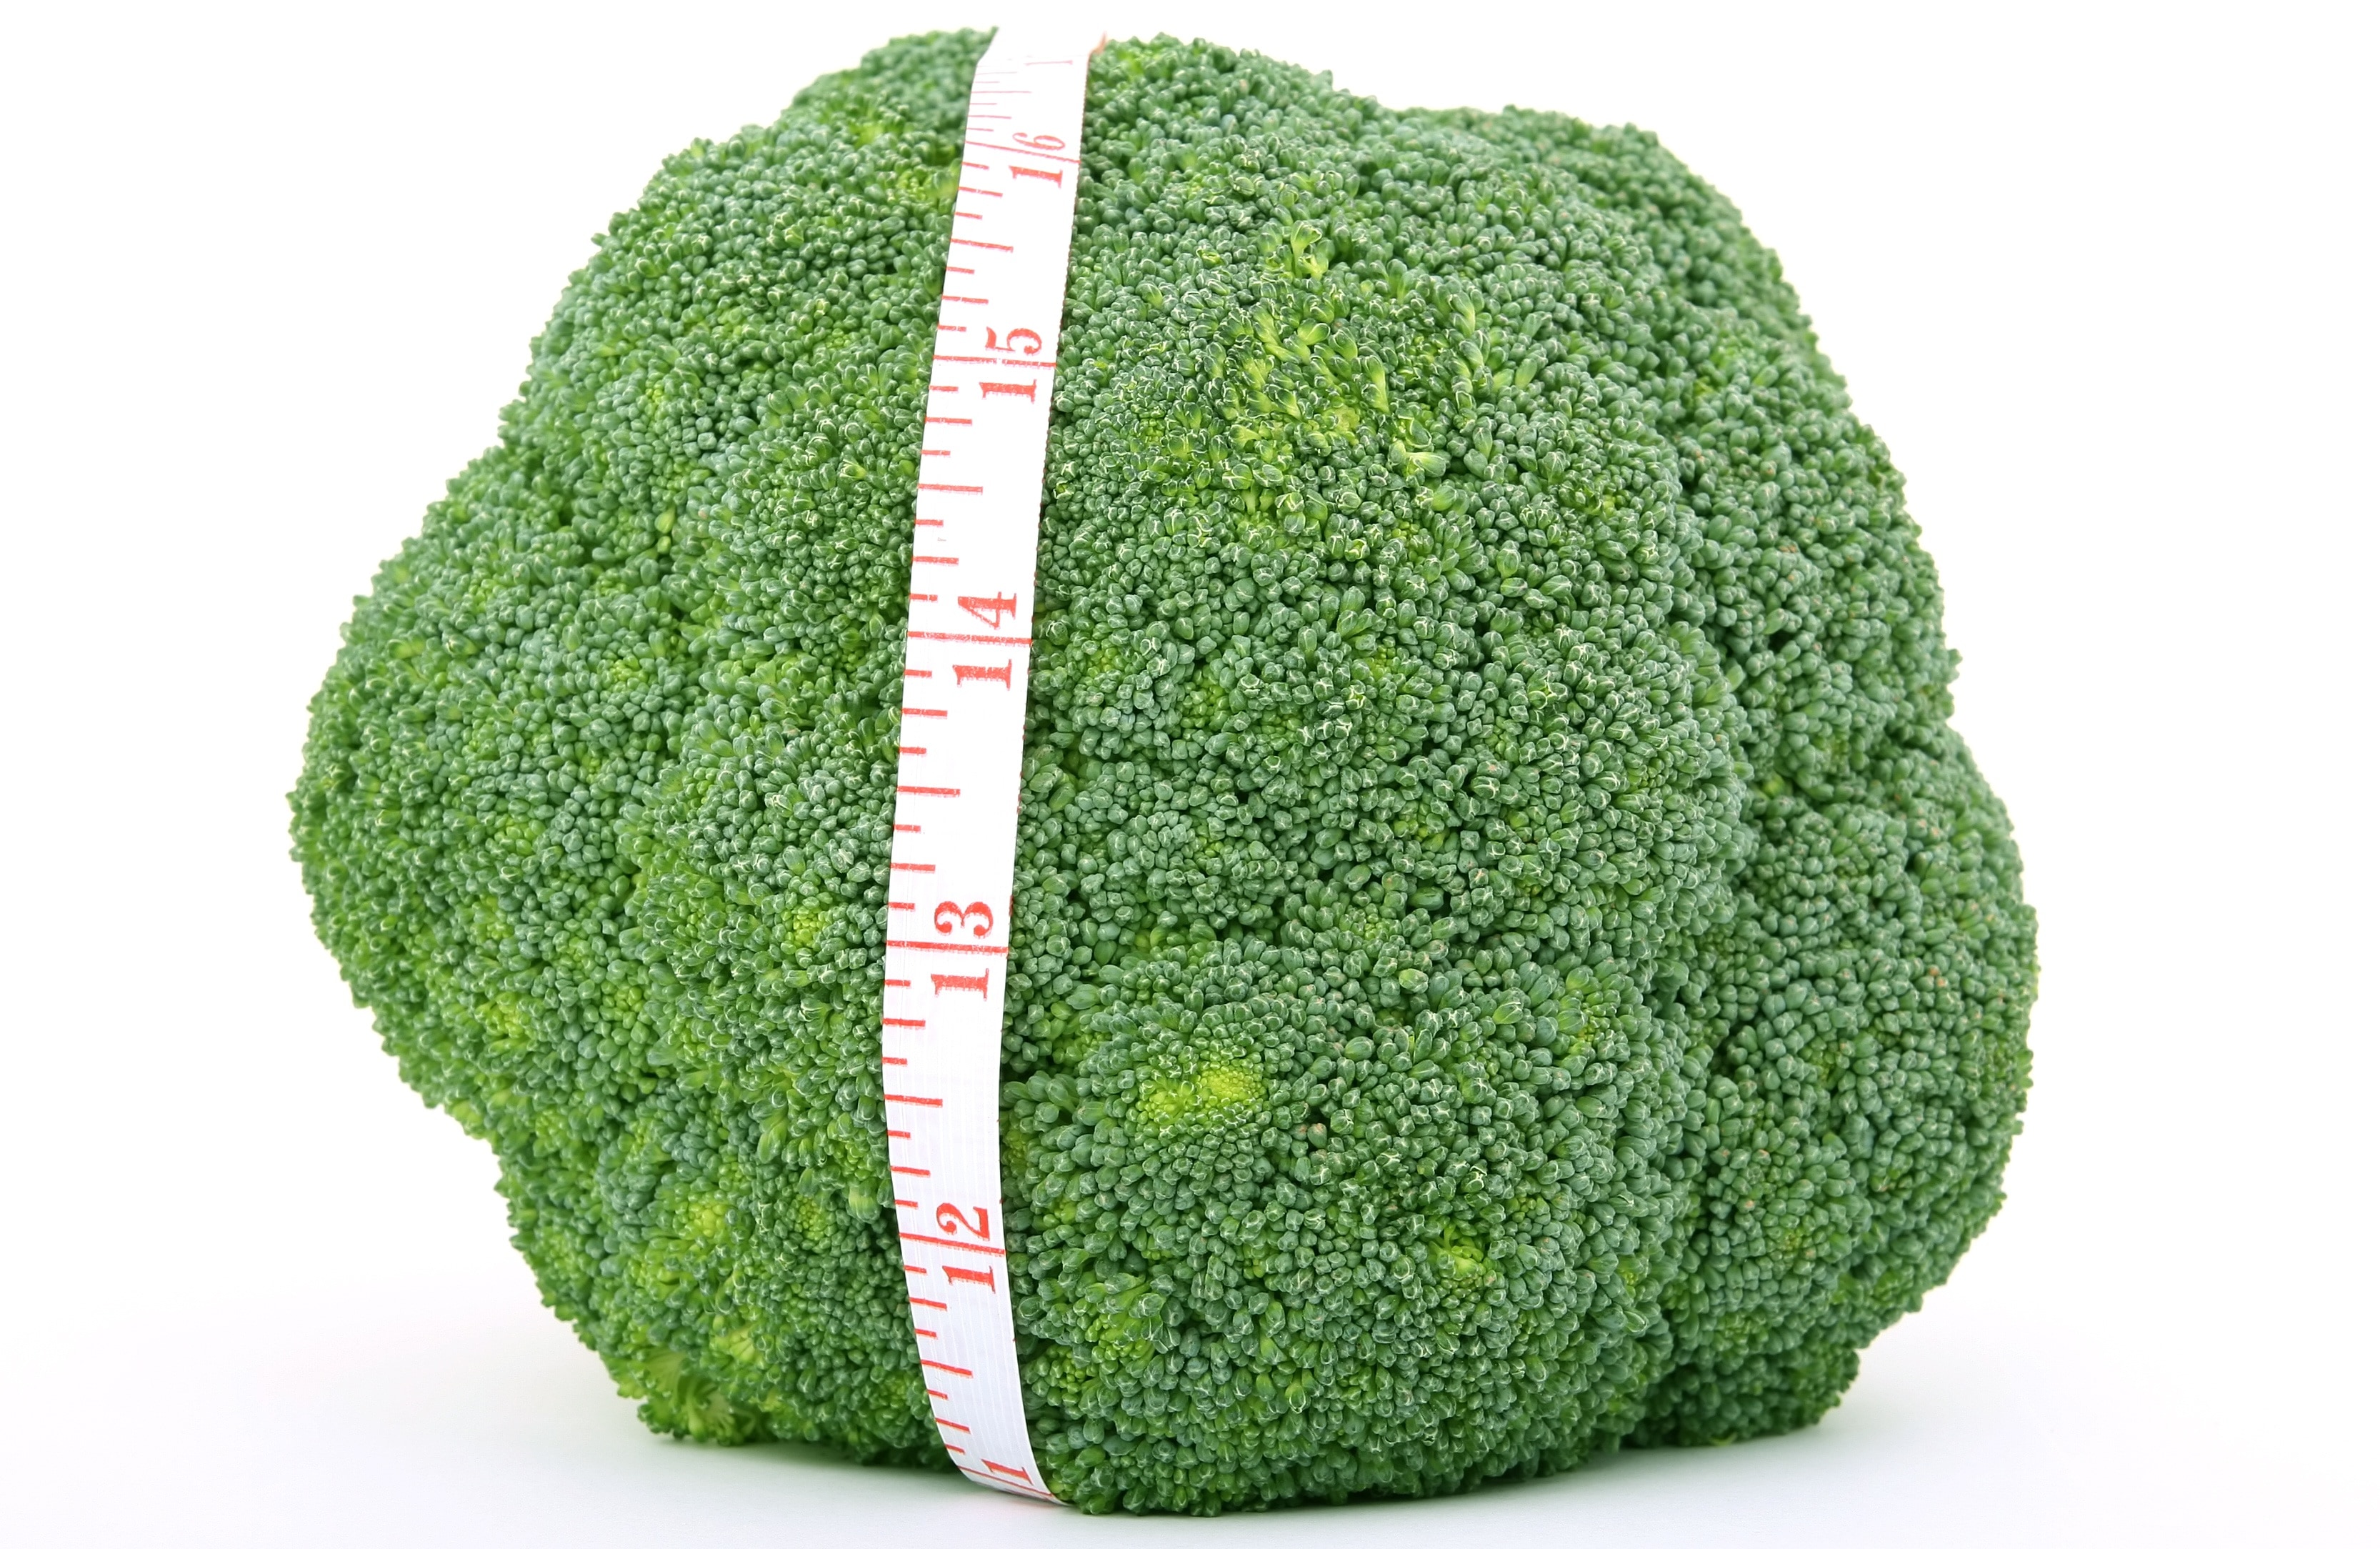 green broccolli